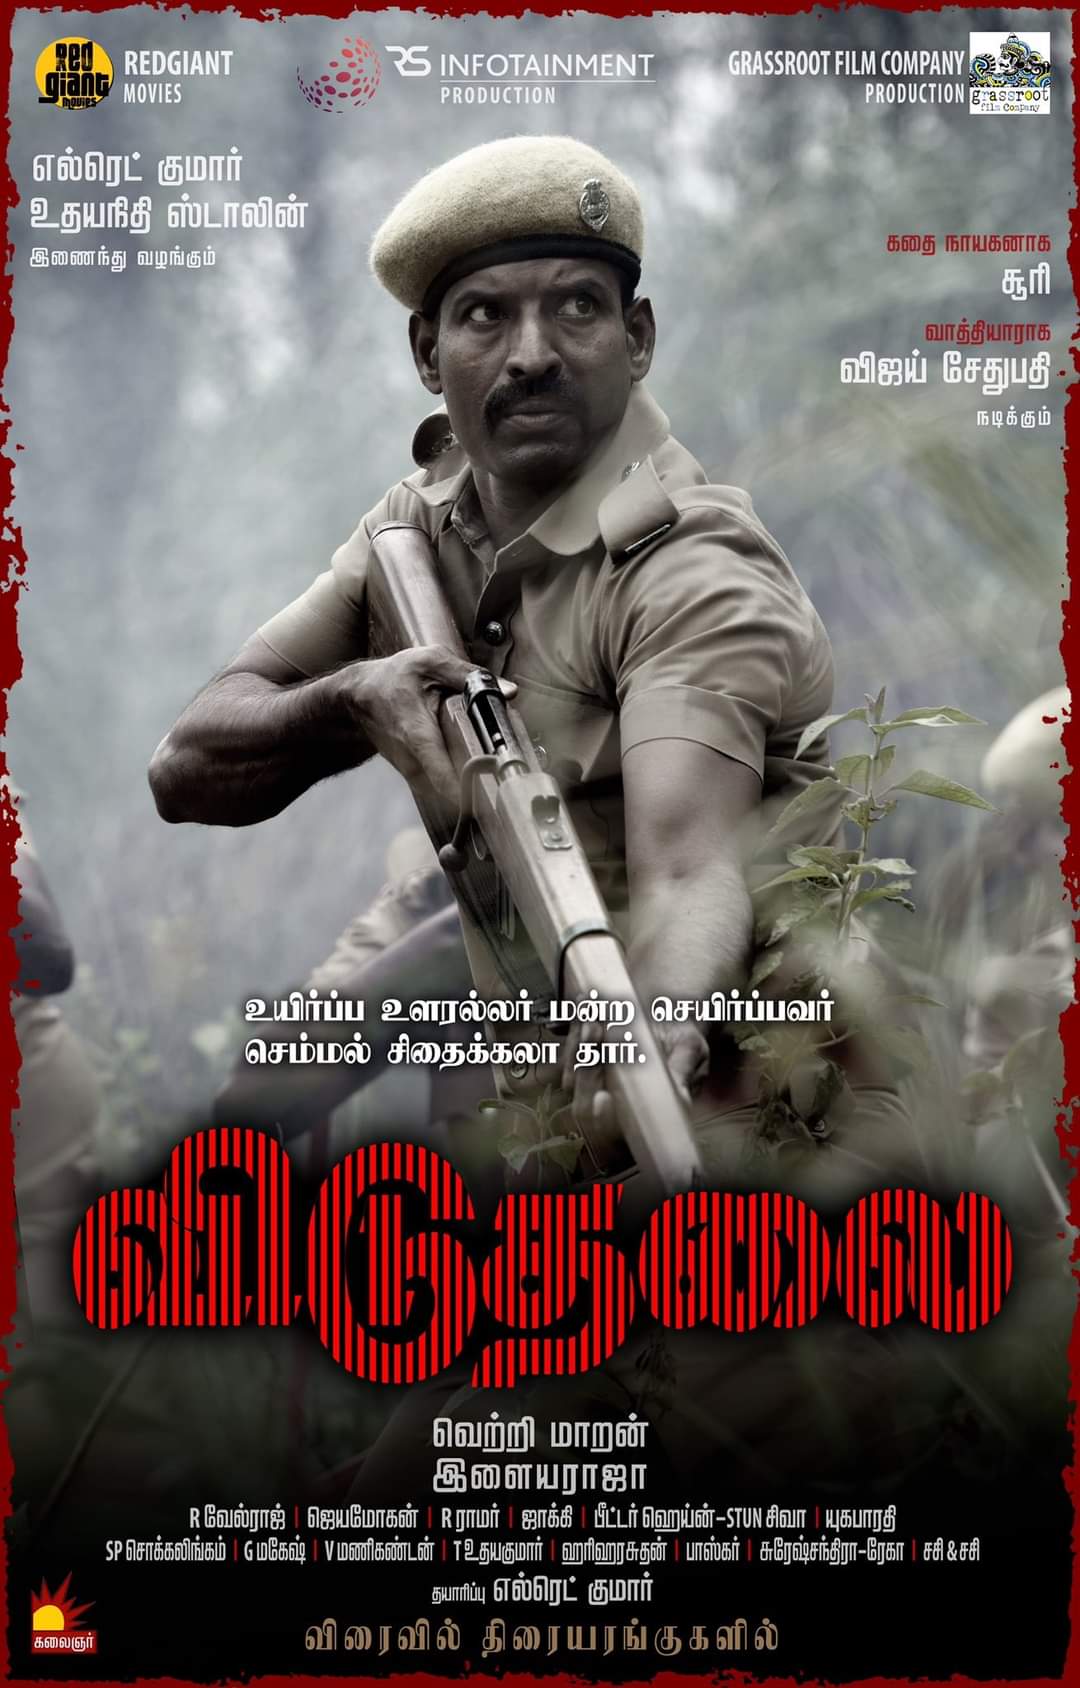 Viduthalai Movie Tamilnadu Theatrical Rights Bagged by Udhayanidhi Stalin